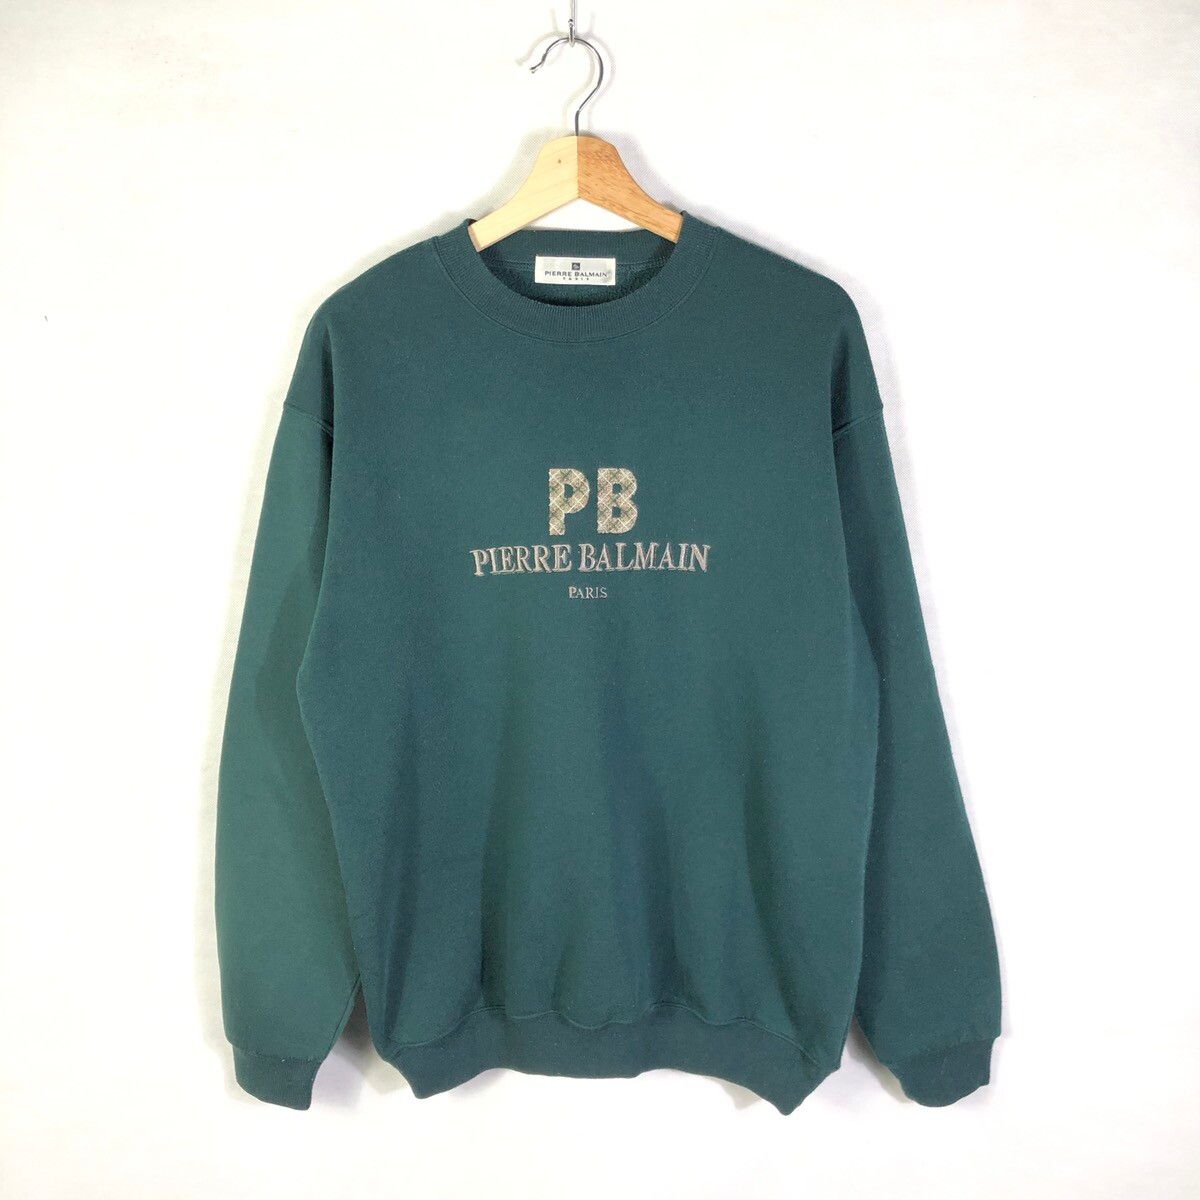 Vintage Pierre Balmain Paris Embroidery Crewneck Sweatshirt - 1